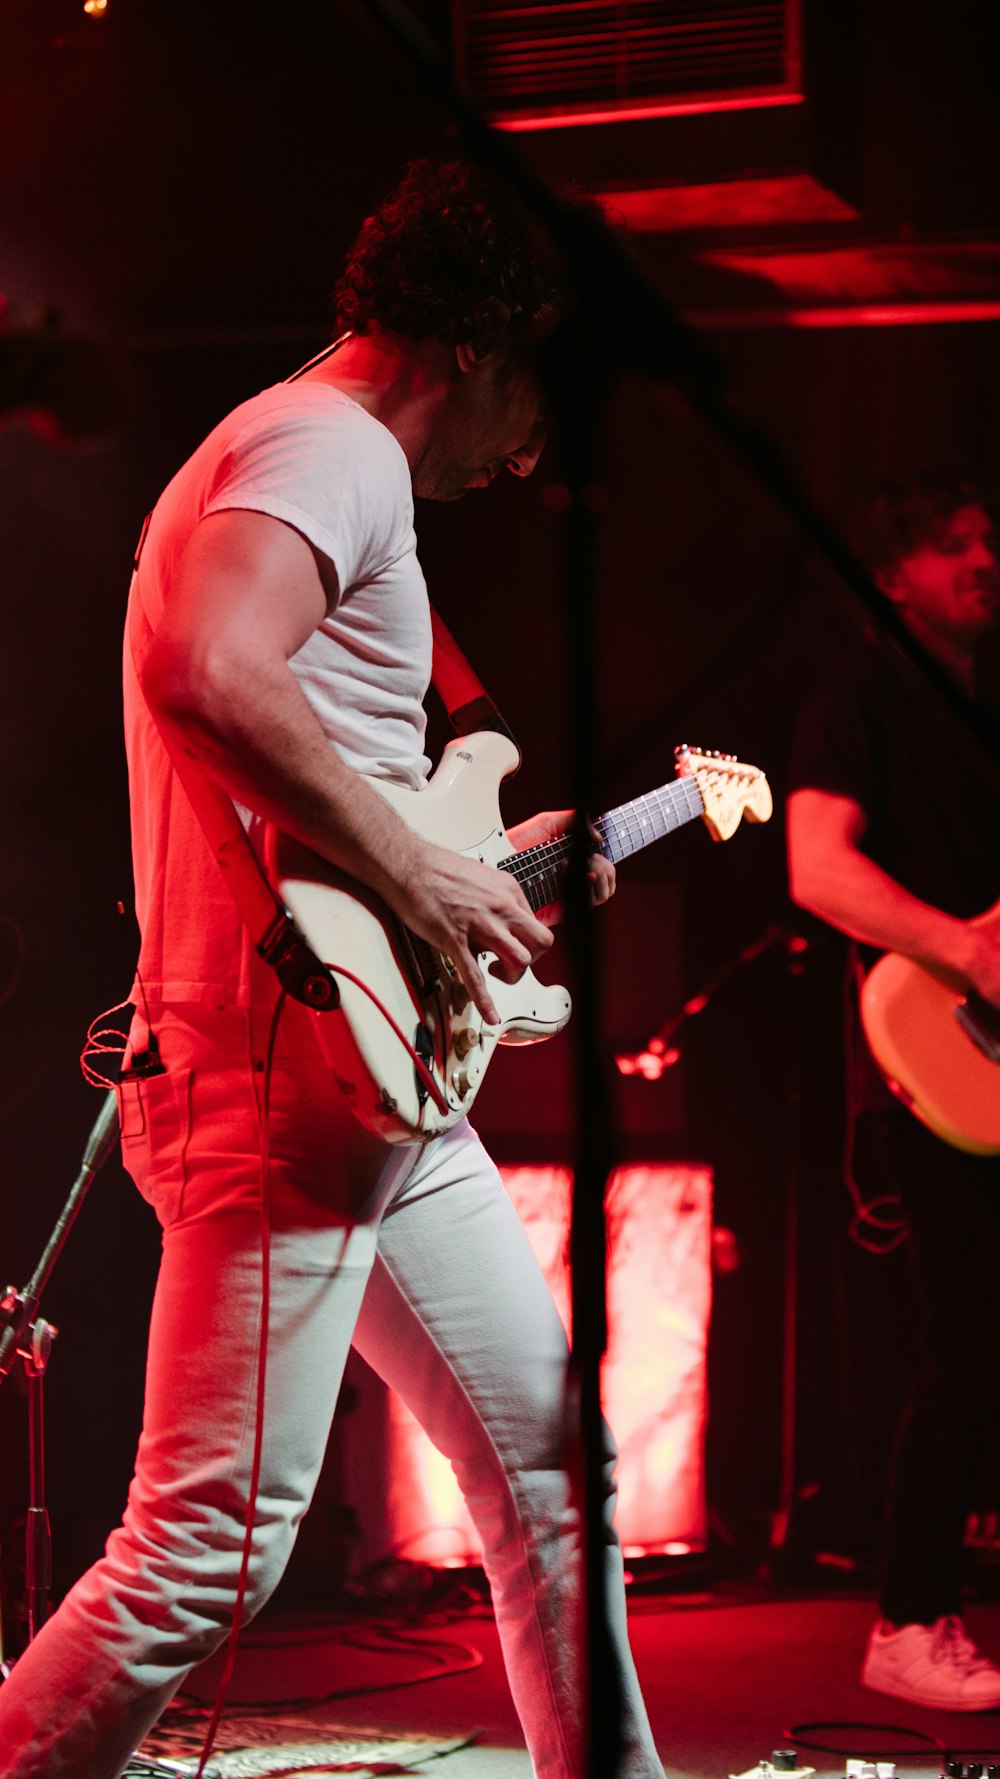 man in gray t-shirt playing electric guitar